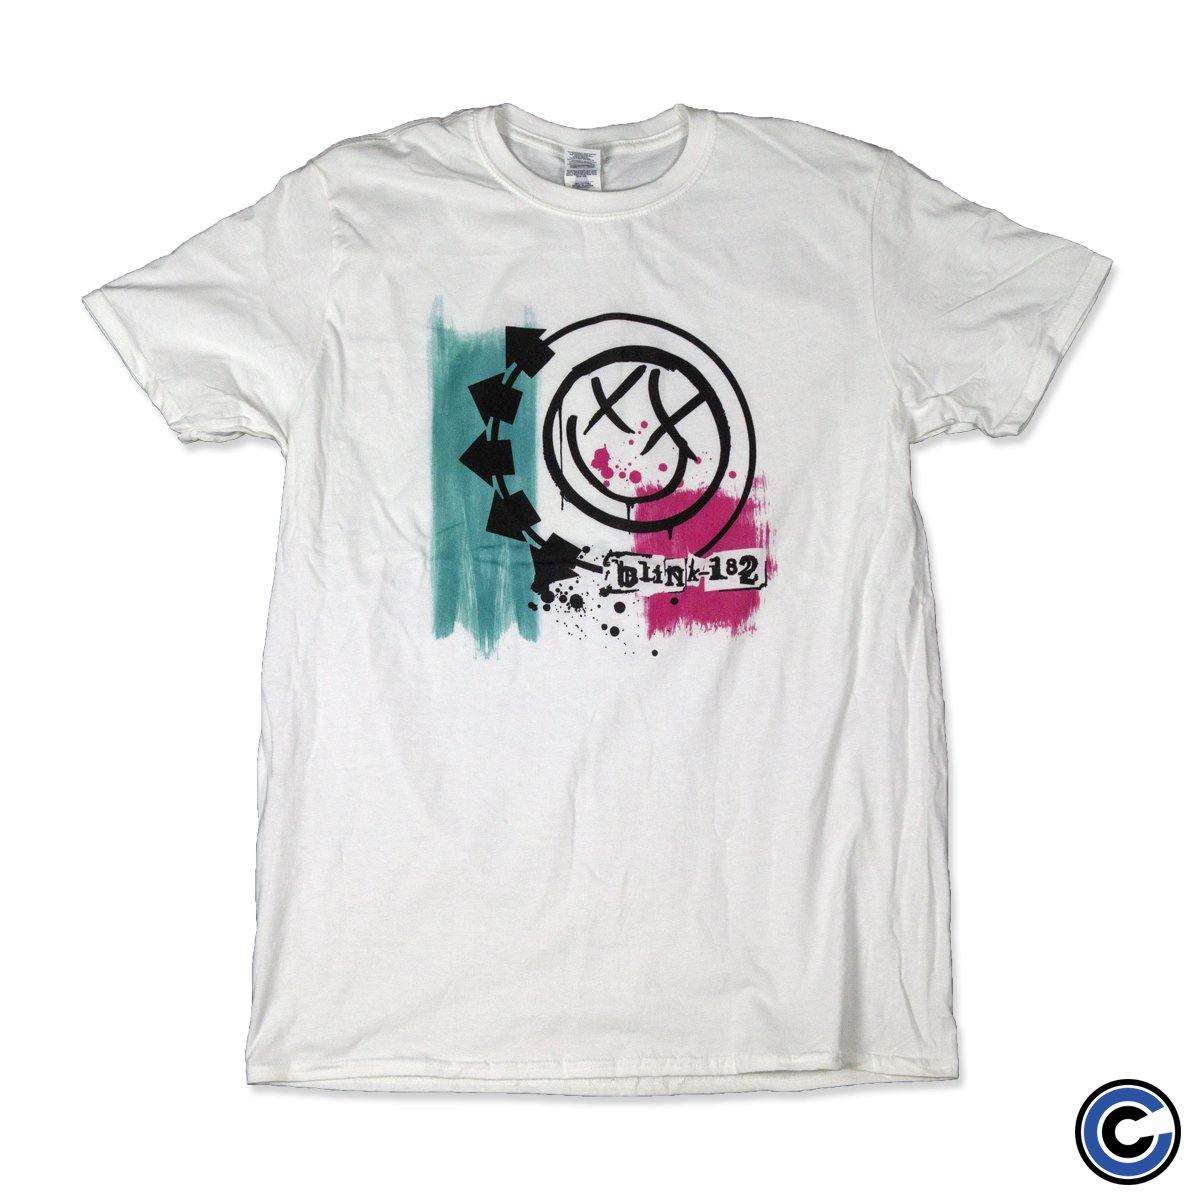 Buy – Blink-182 "Self-Titled" Shirt – Band & Music Merch – Cold Cuts Merch